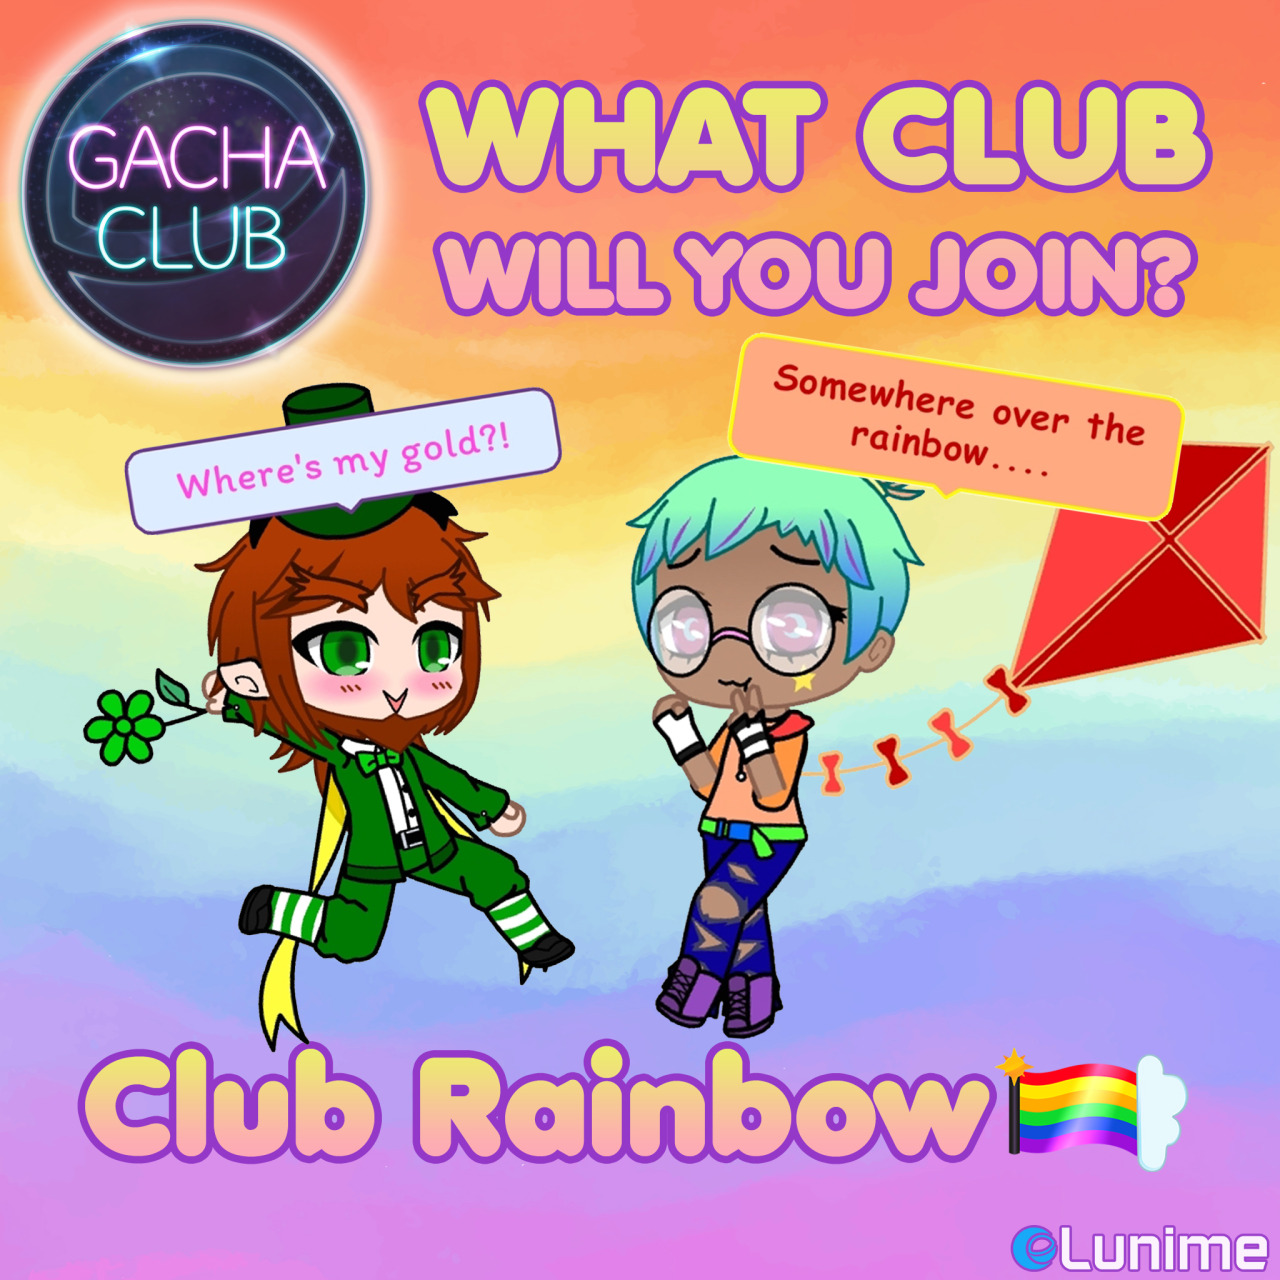 Gacha Club Is Coming Soon